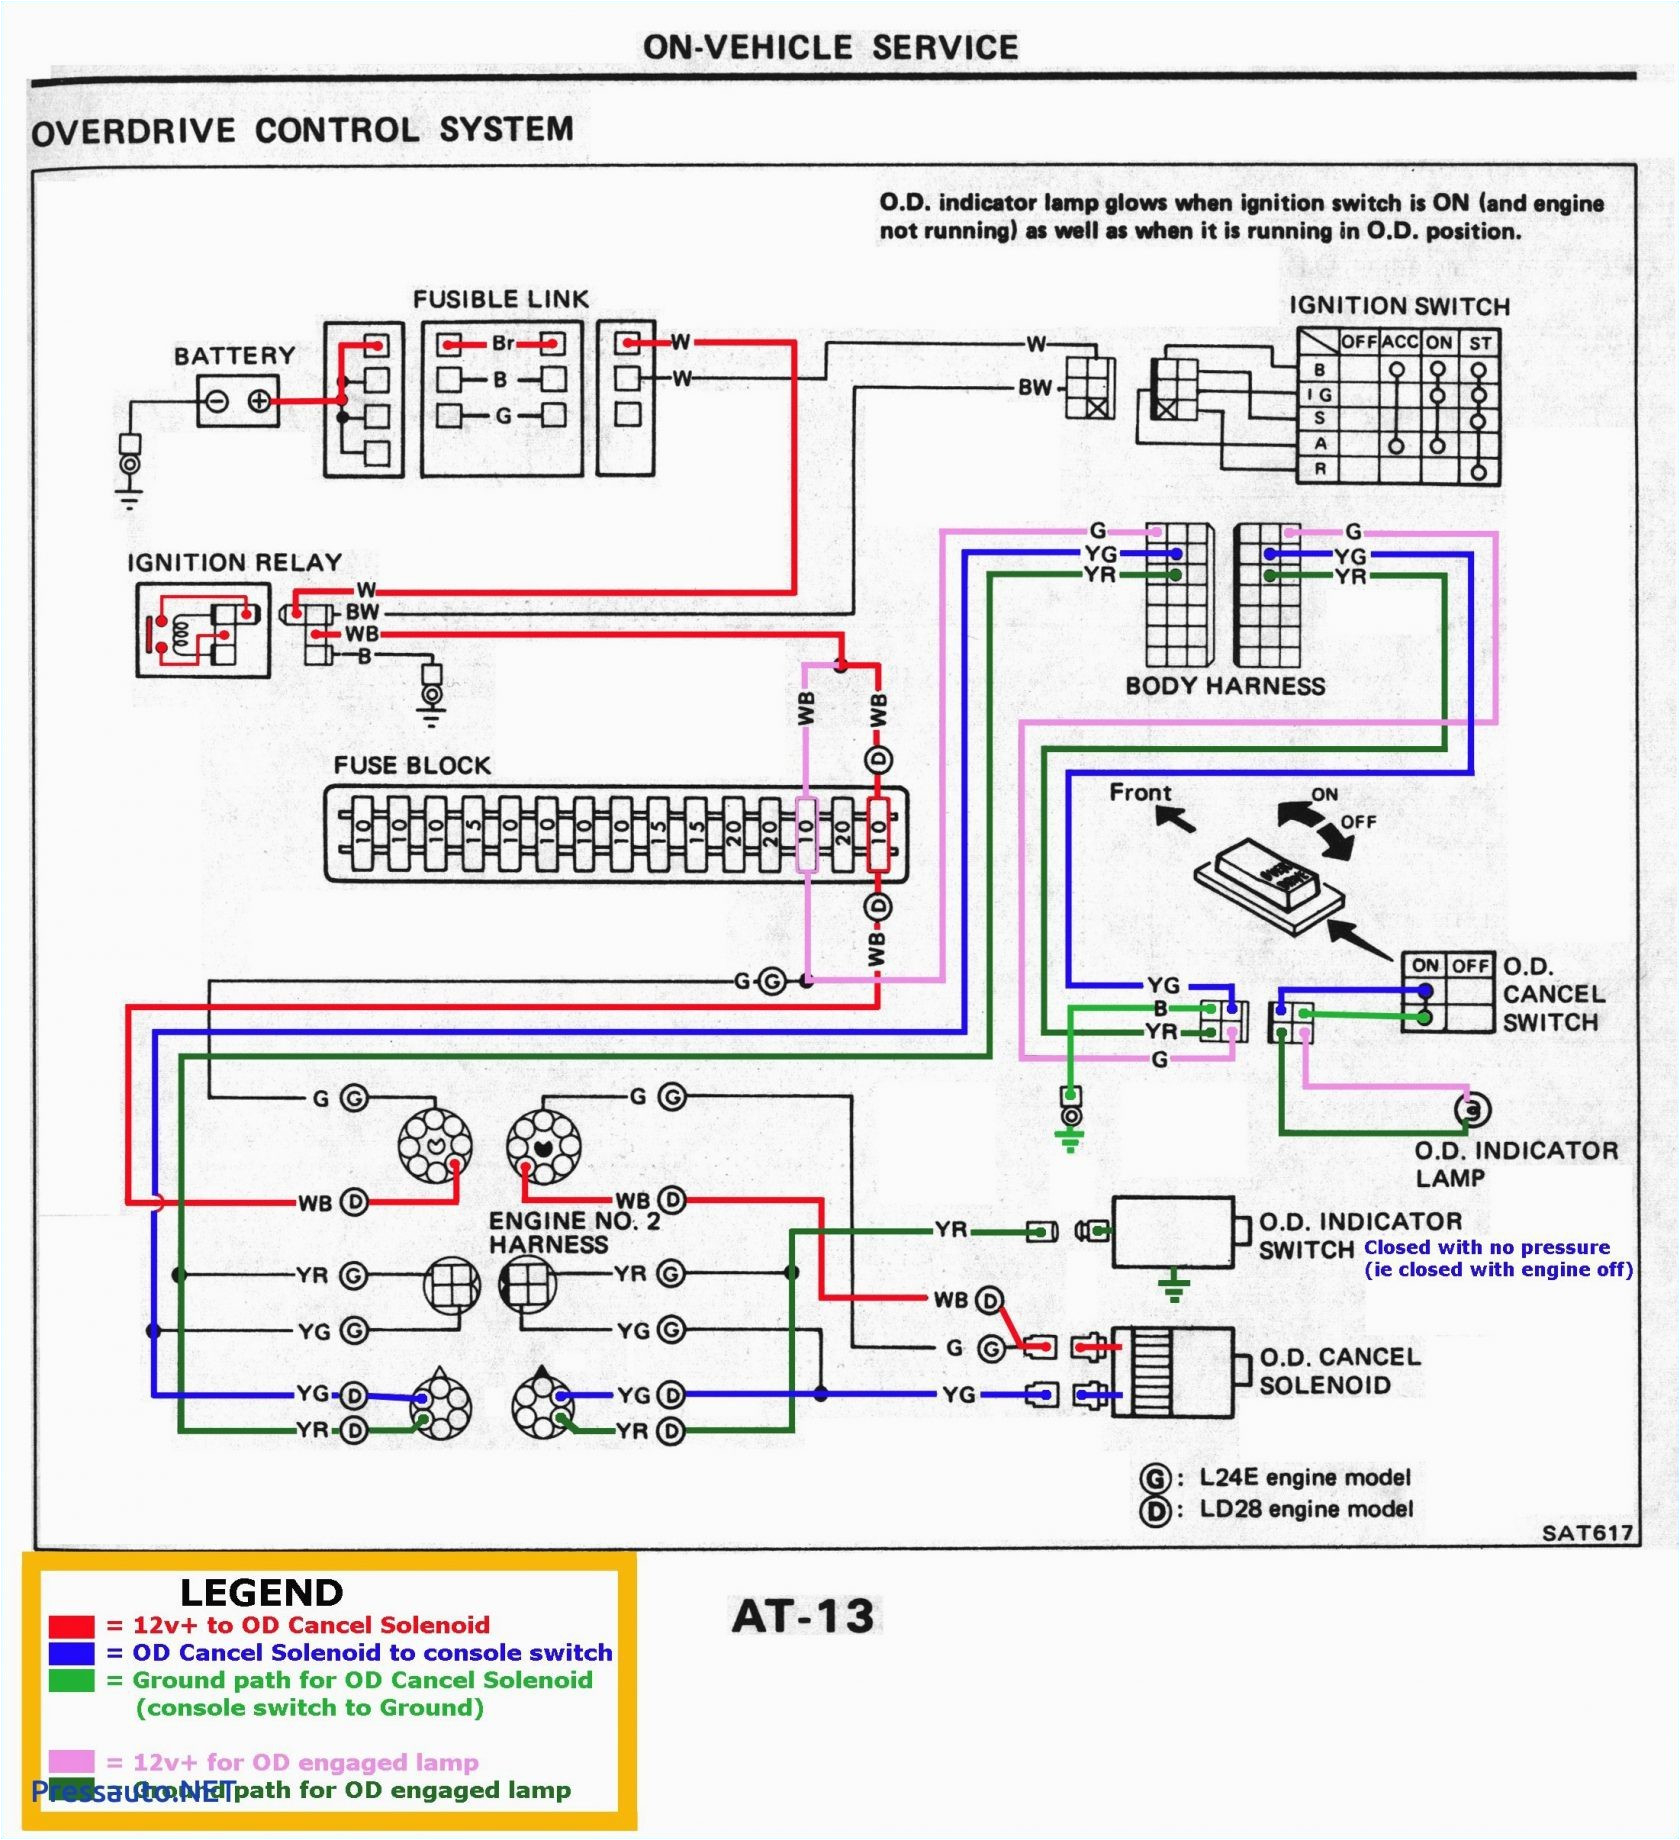 moffett wiring diagram wiring diagram expert m55 wiring diagram